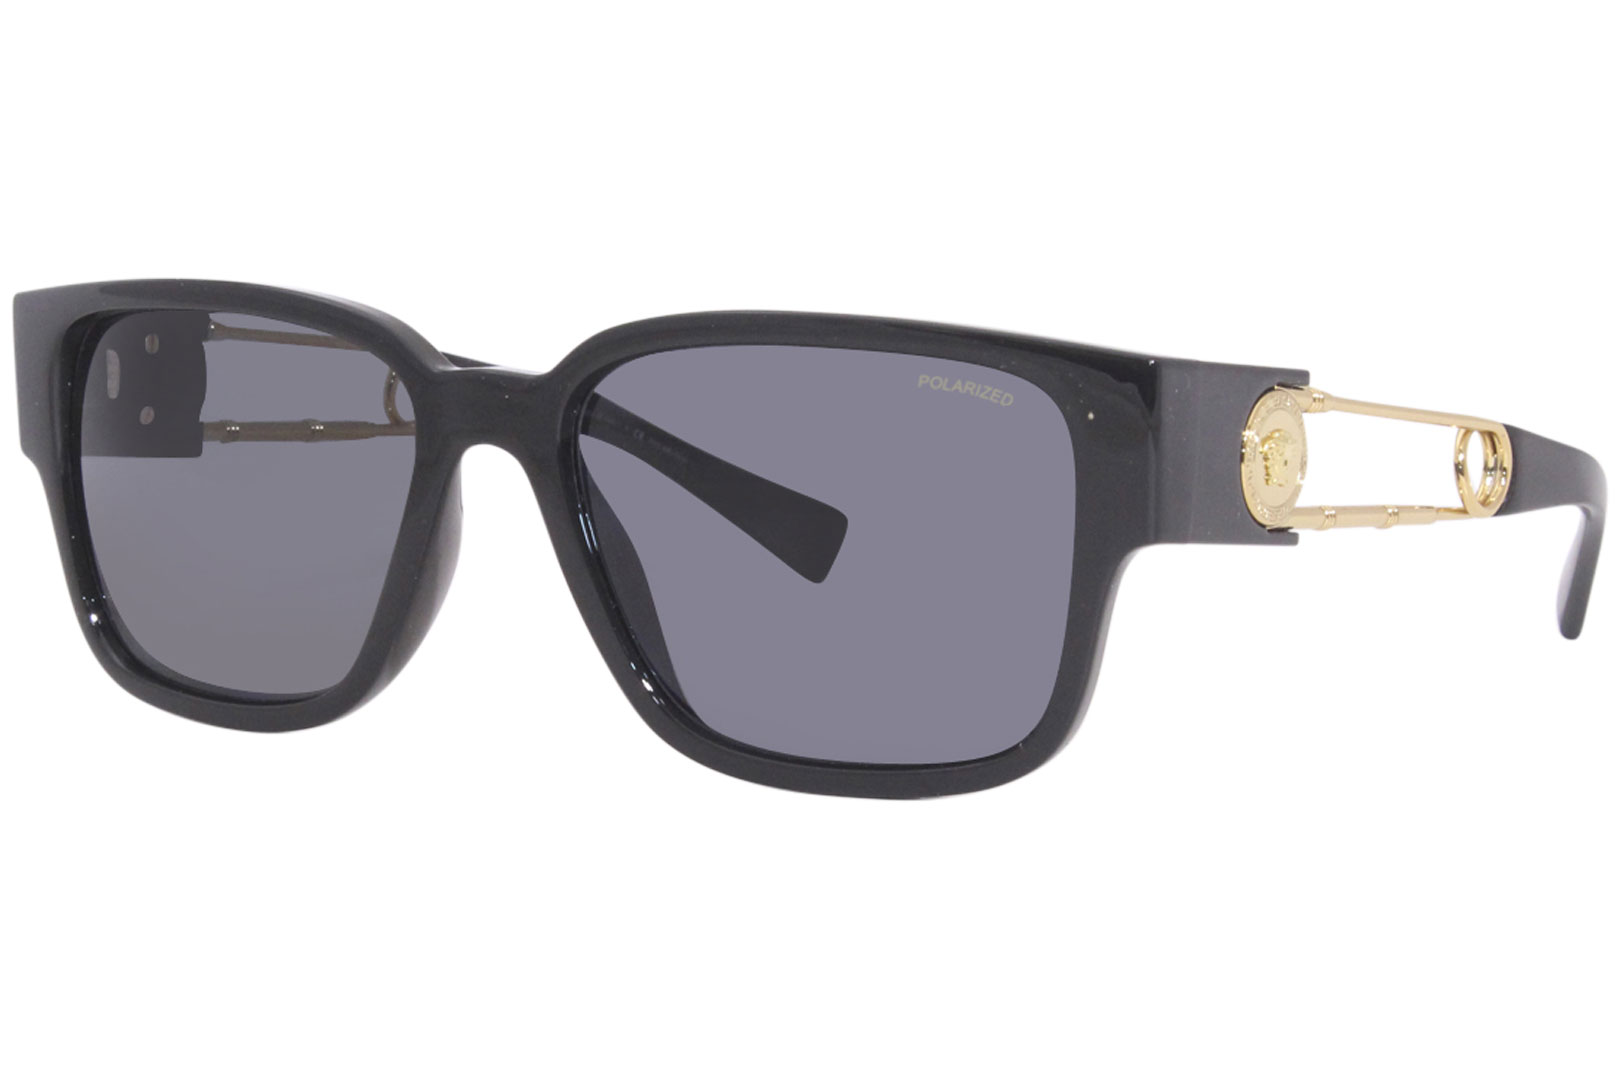 Versace Man Sunglasses, Polarized HAVANA Lenses Metal Frame 2199, Authentic